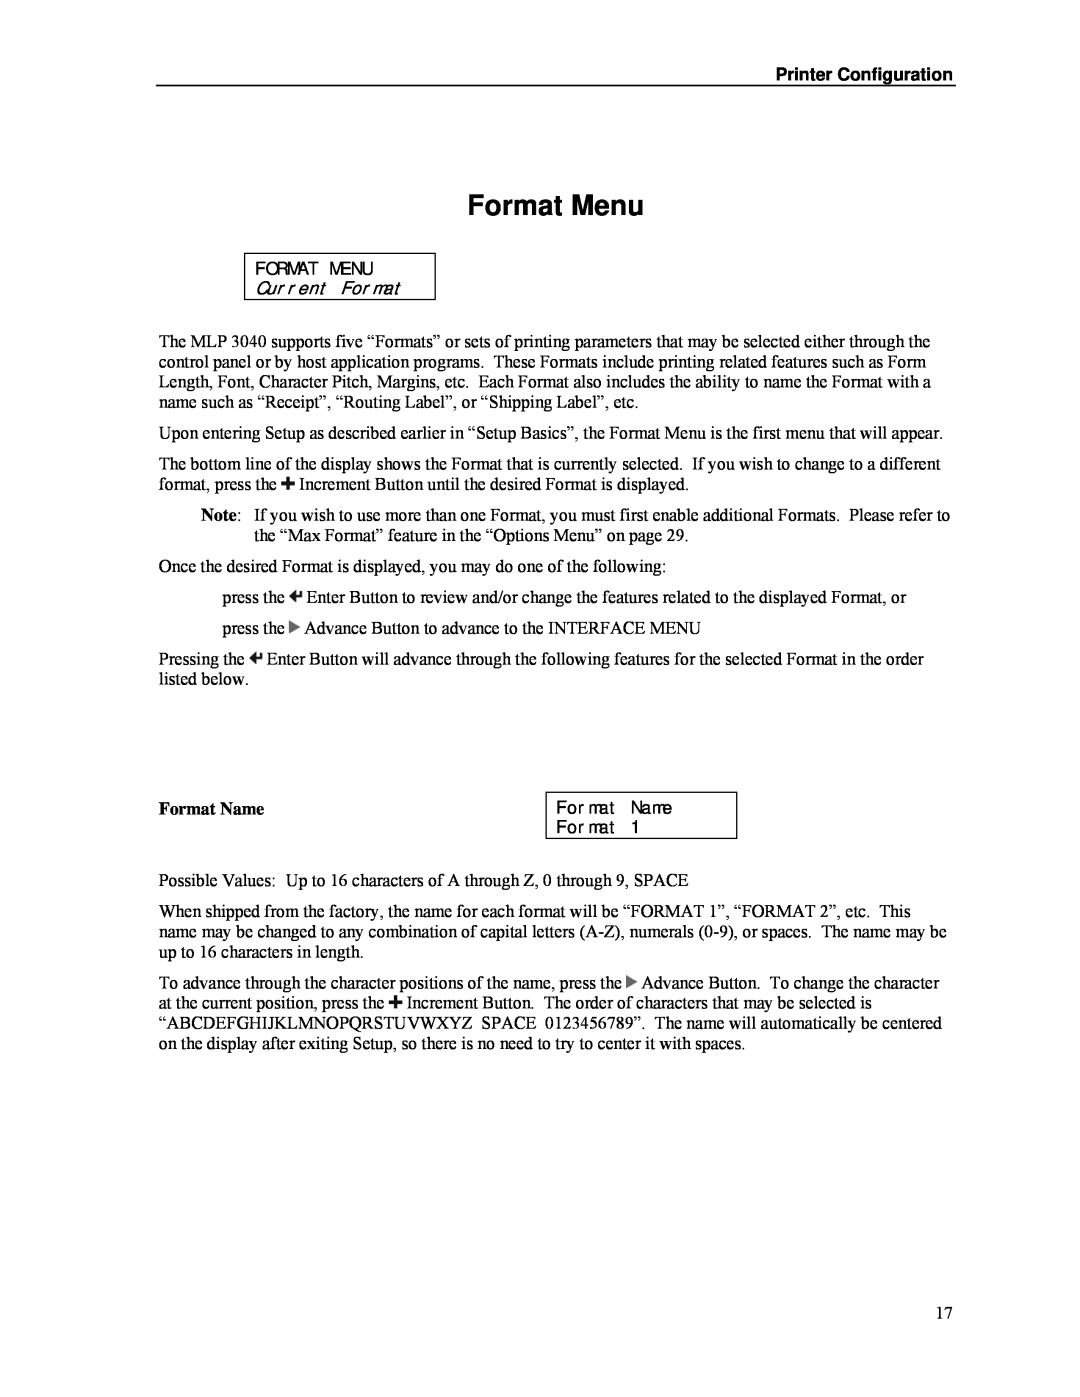 Psion Teklogix MLP 3040 Series manual Format Menu, Current Format, Format Name, Printer Configuration 